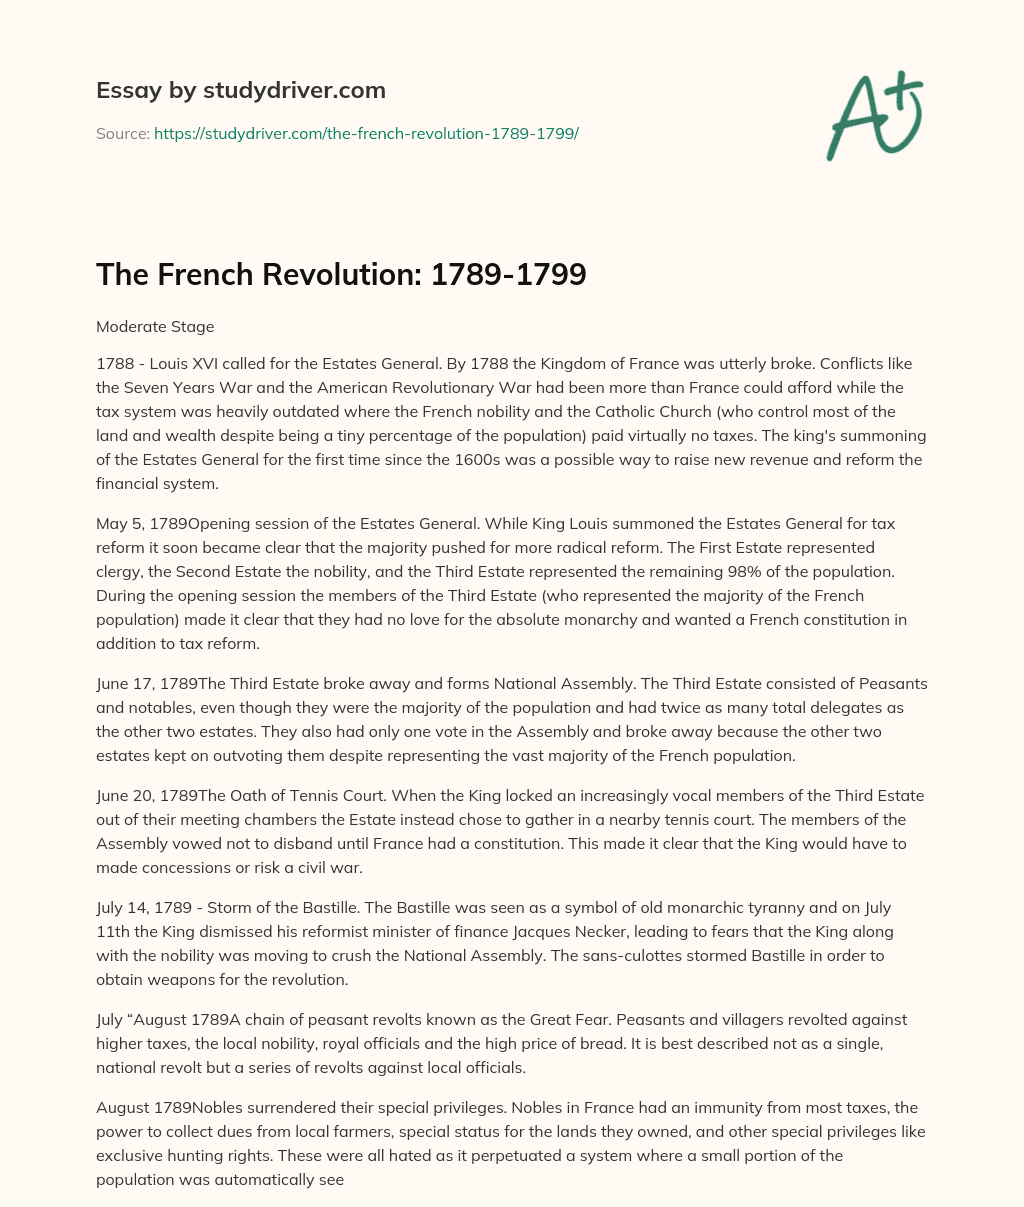 The French Revolution: 1789-1799 essay